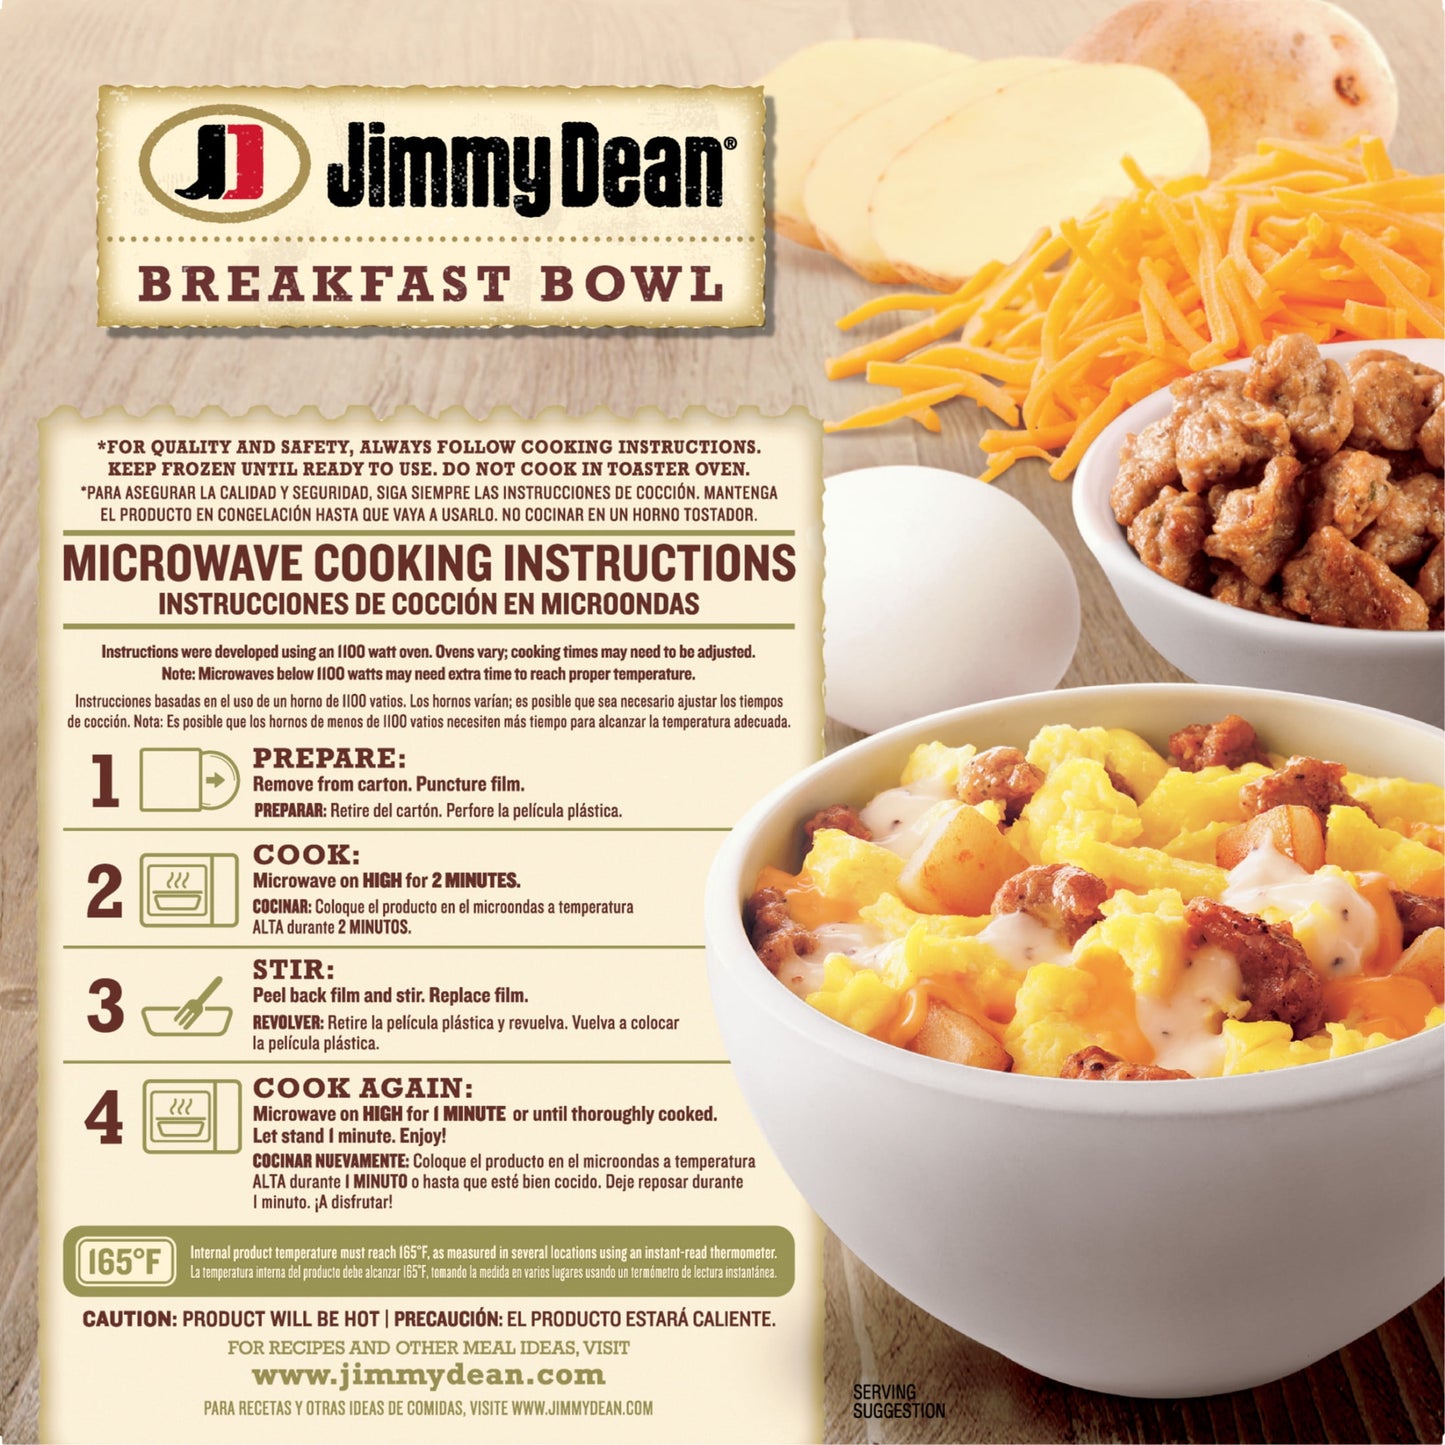 Jimmy Dean Sausage & Gravy Breakfast Bowl, 7 oz (Frozen)